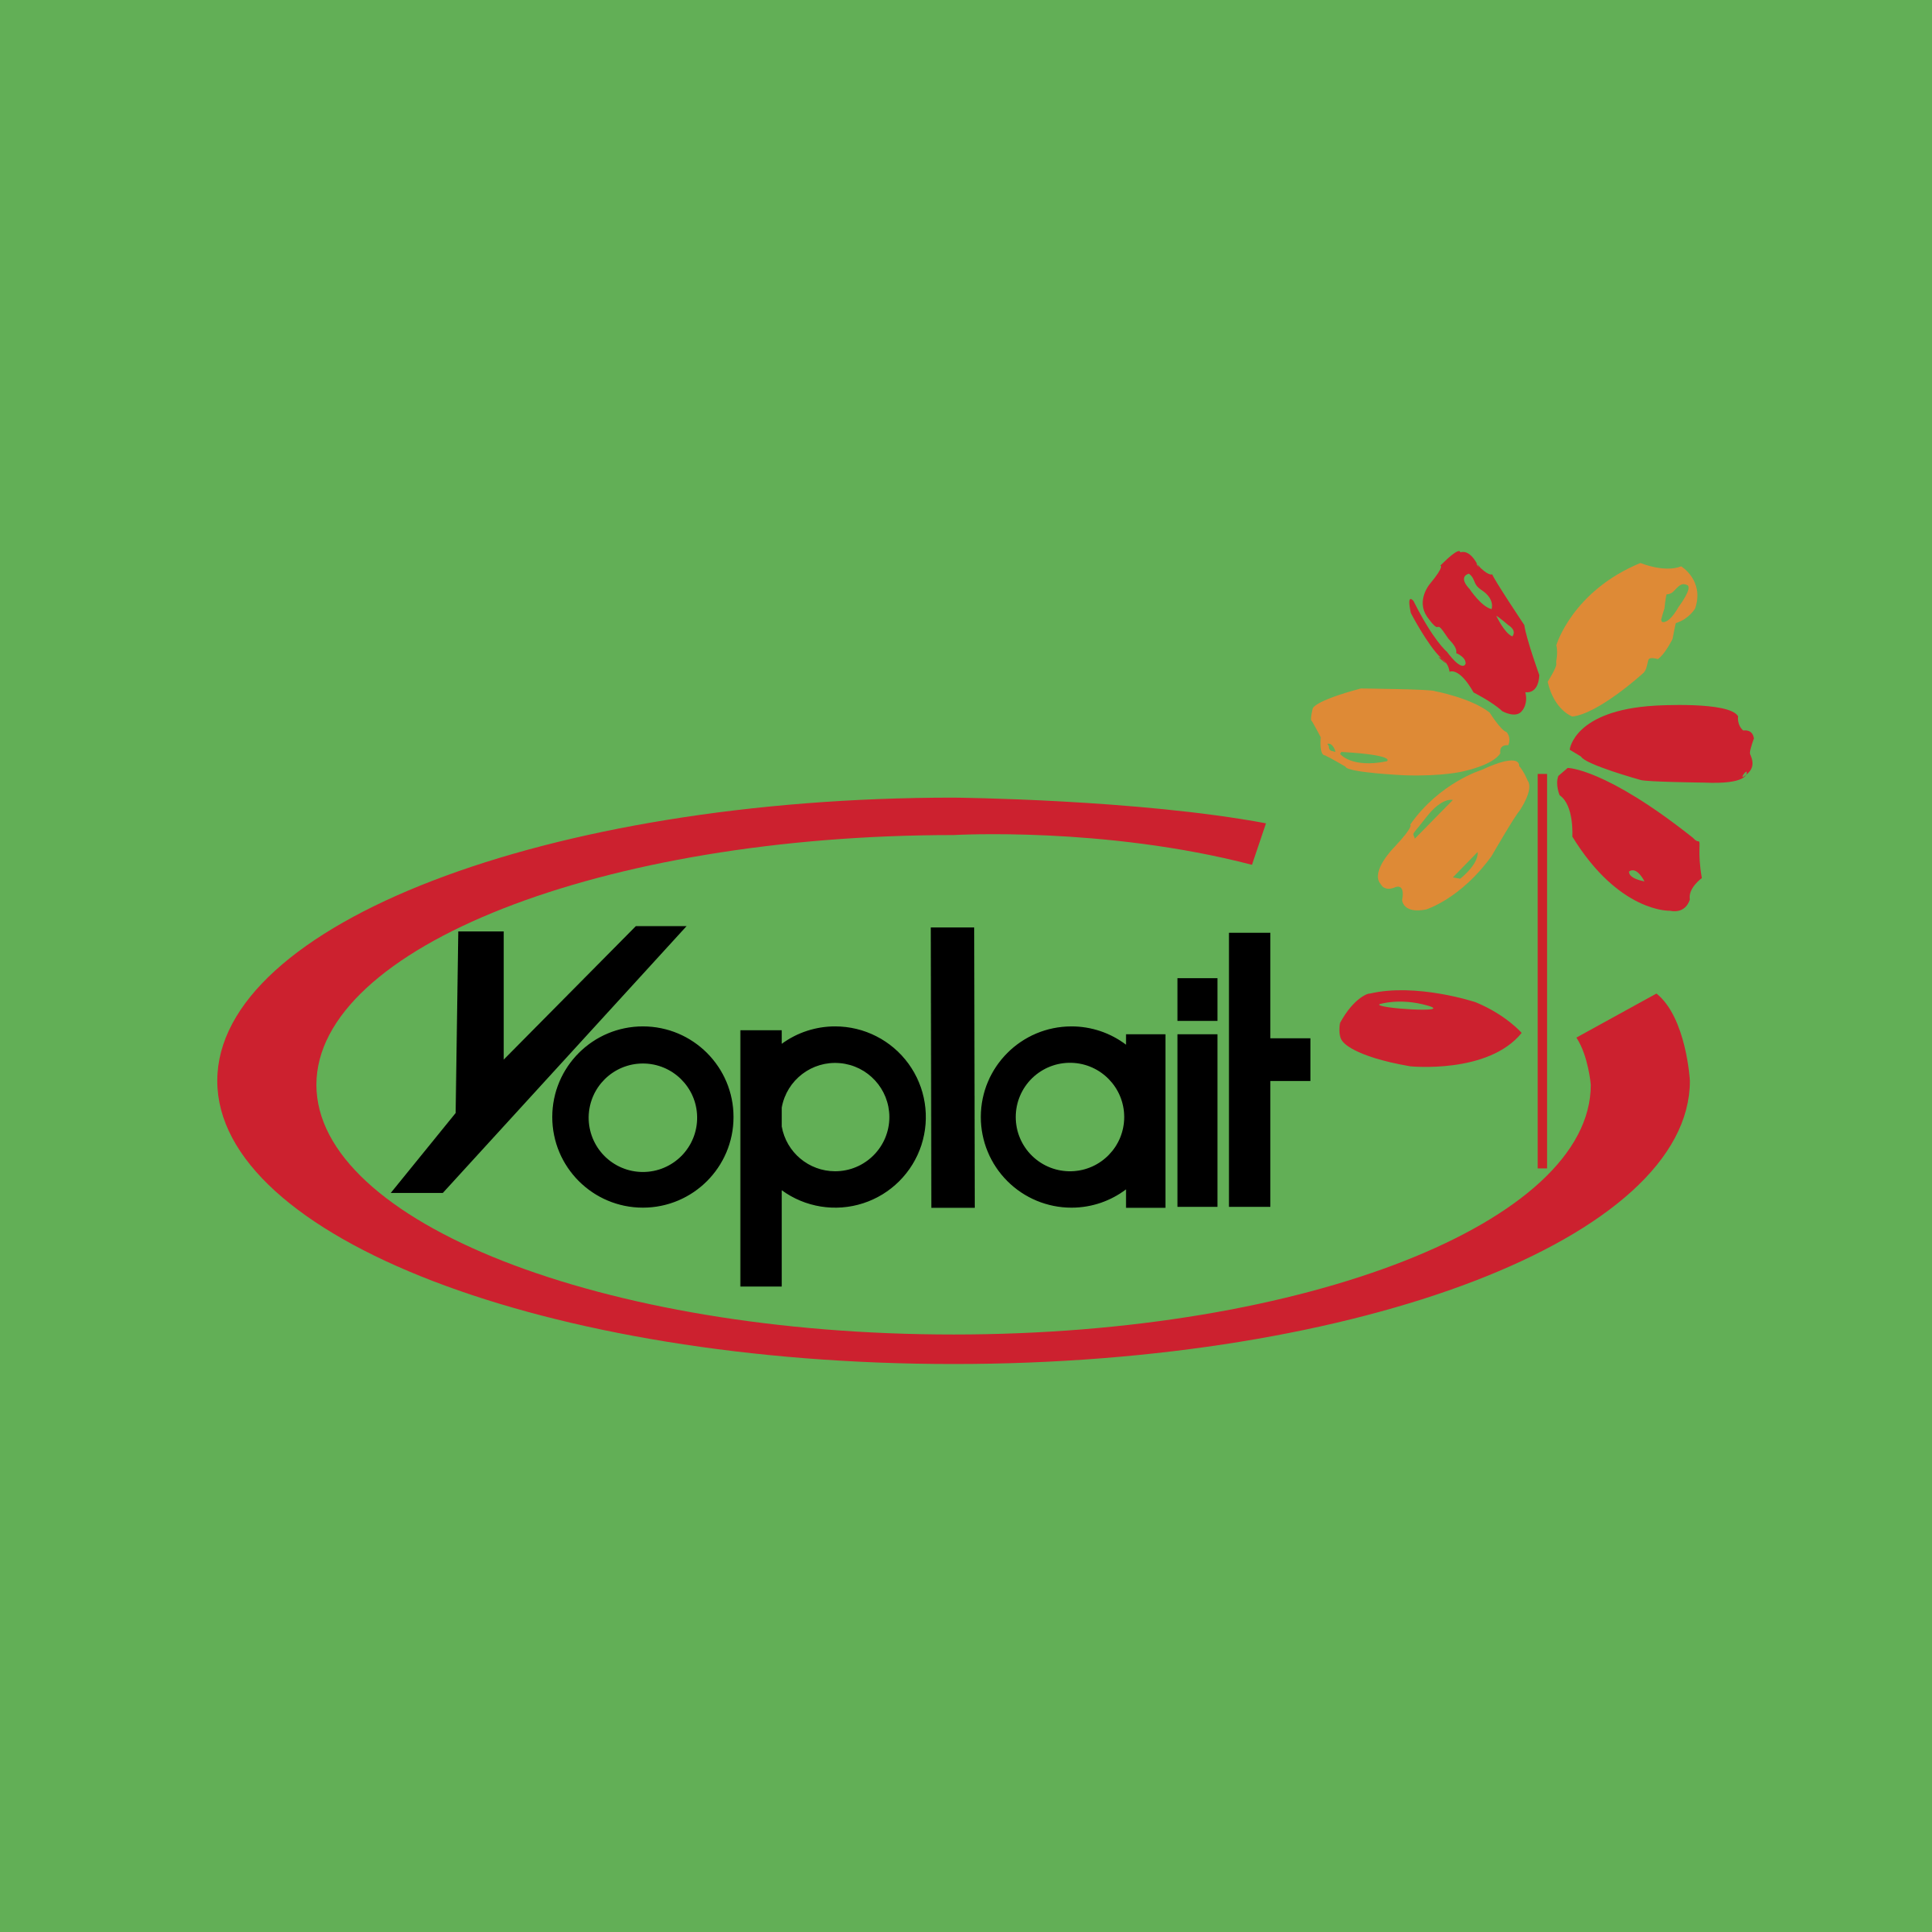 Yoplait Logo - Yoplait Logo PNG Transparent & SVG Vector - Freebie Supply